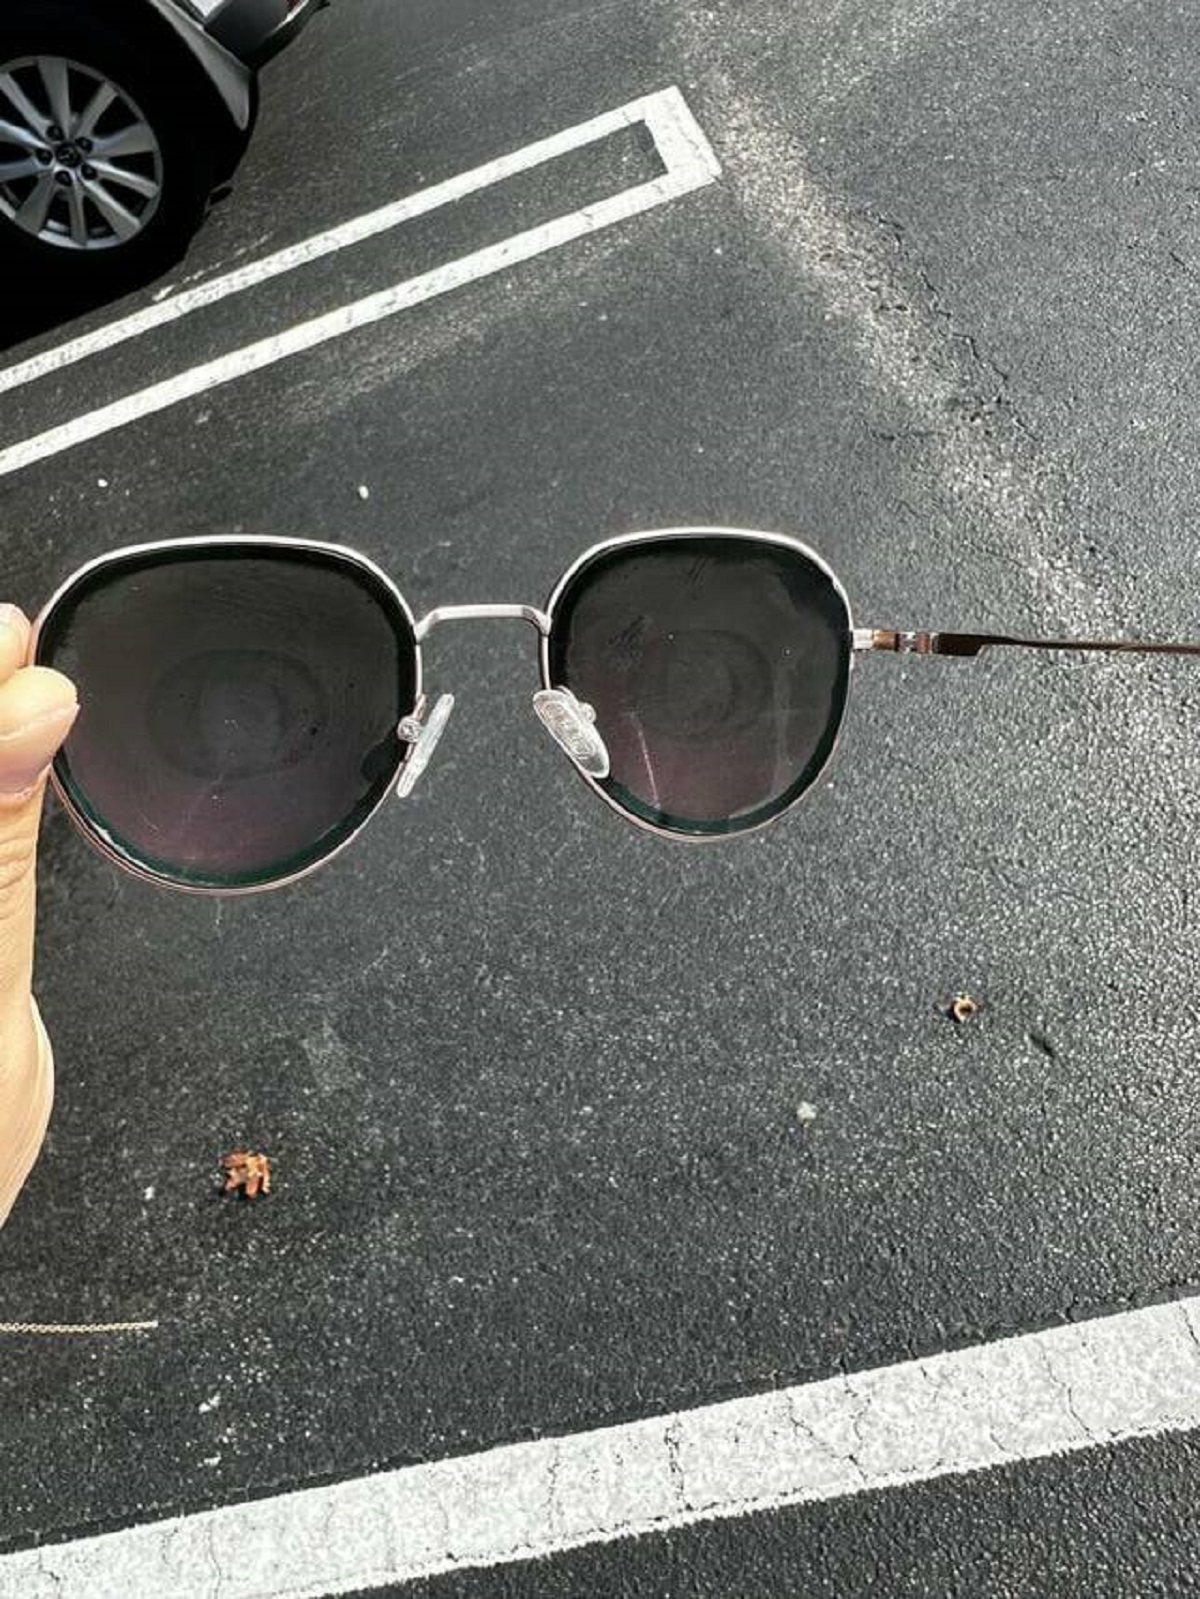 "Sunglasses have eye print"